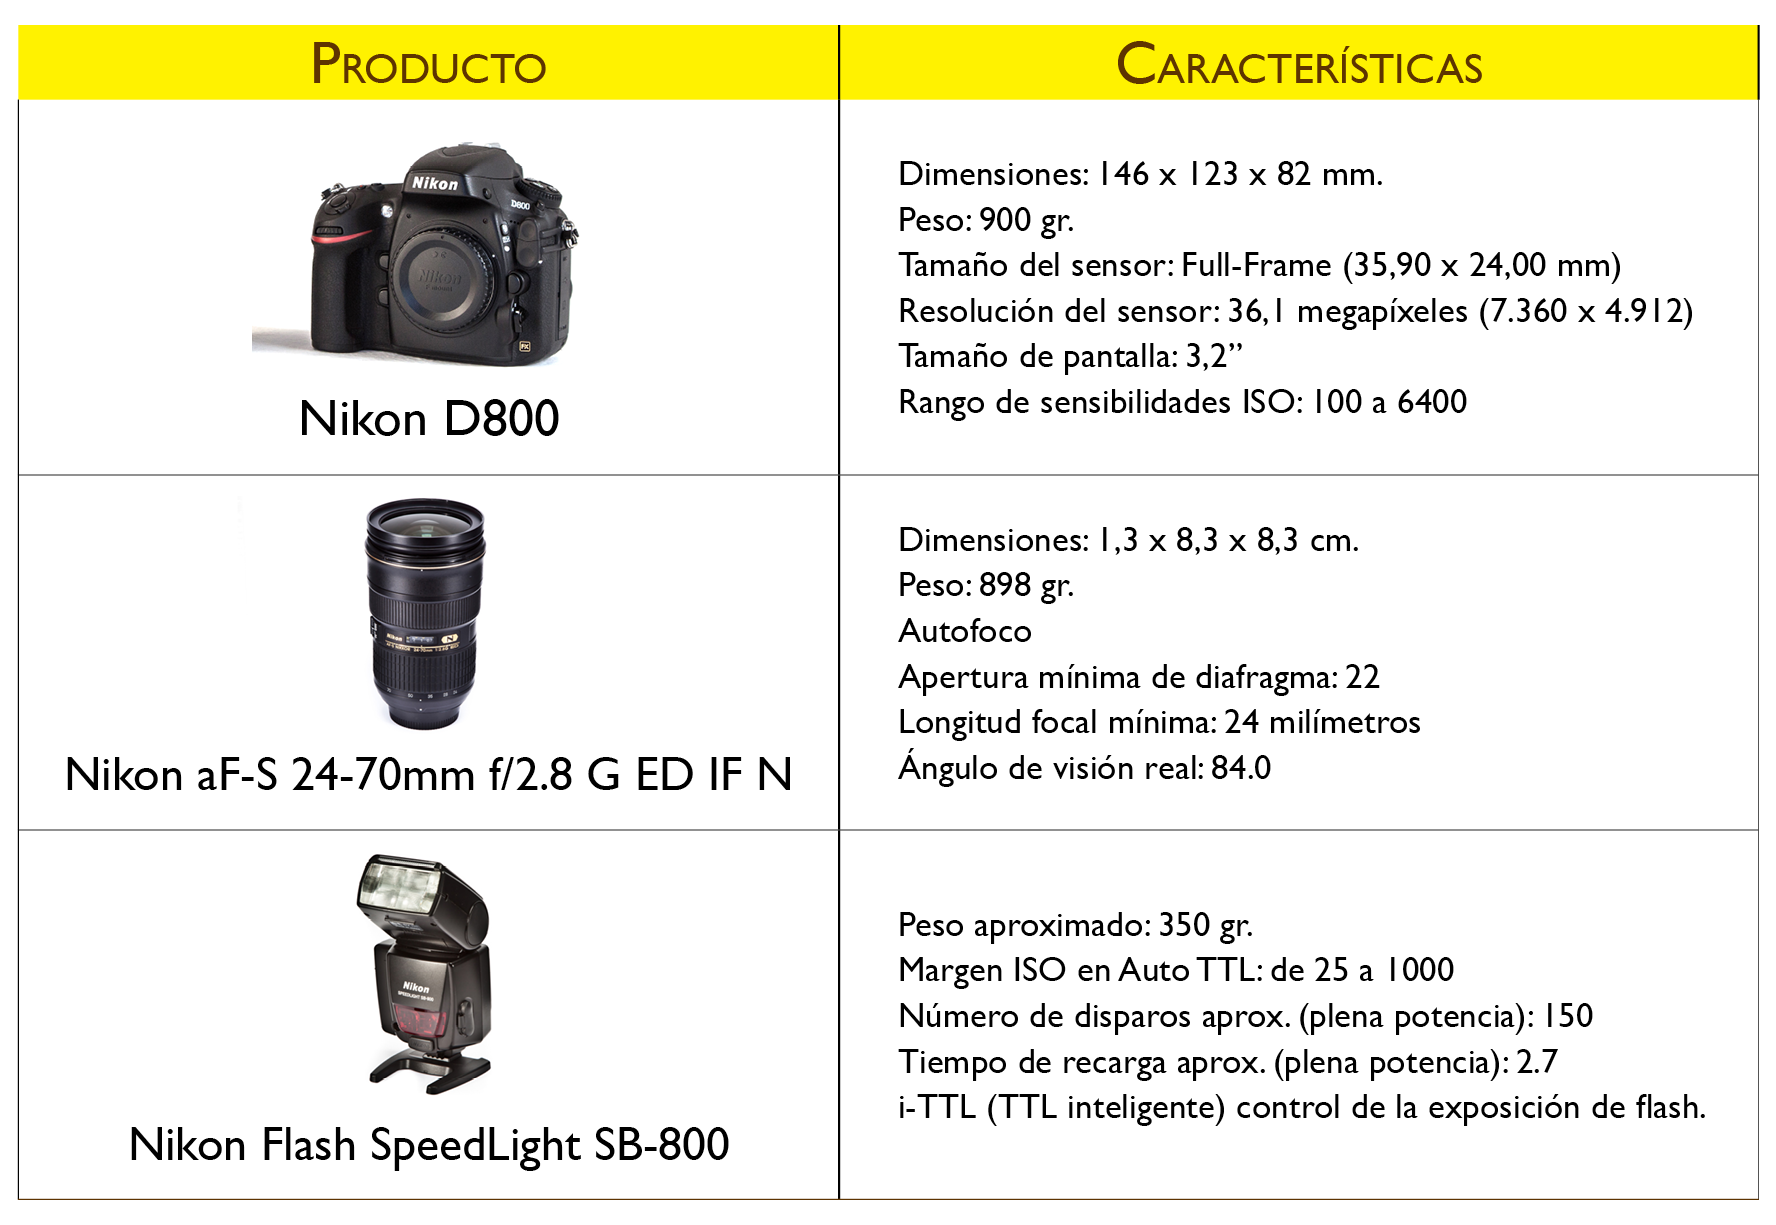 Oferta de la semana - Nikon D800 con objetivo 24-70mm f/2.8 y flash